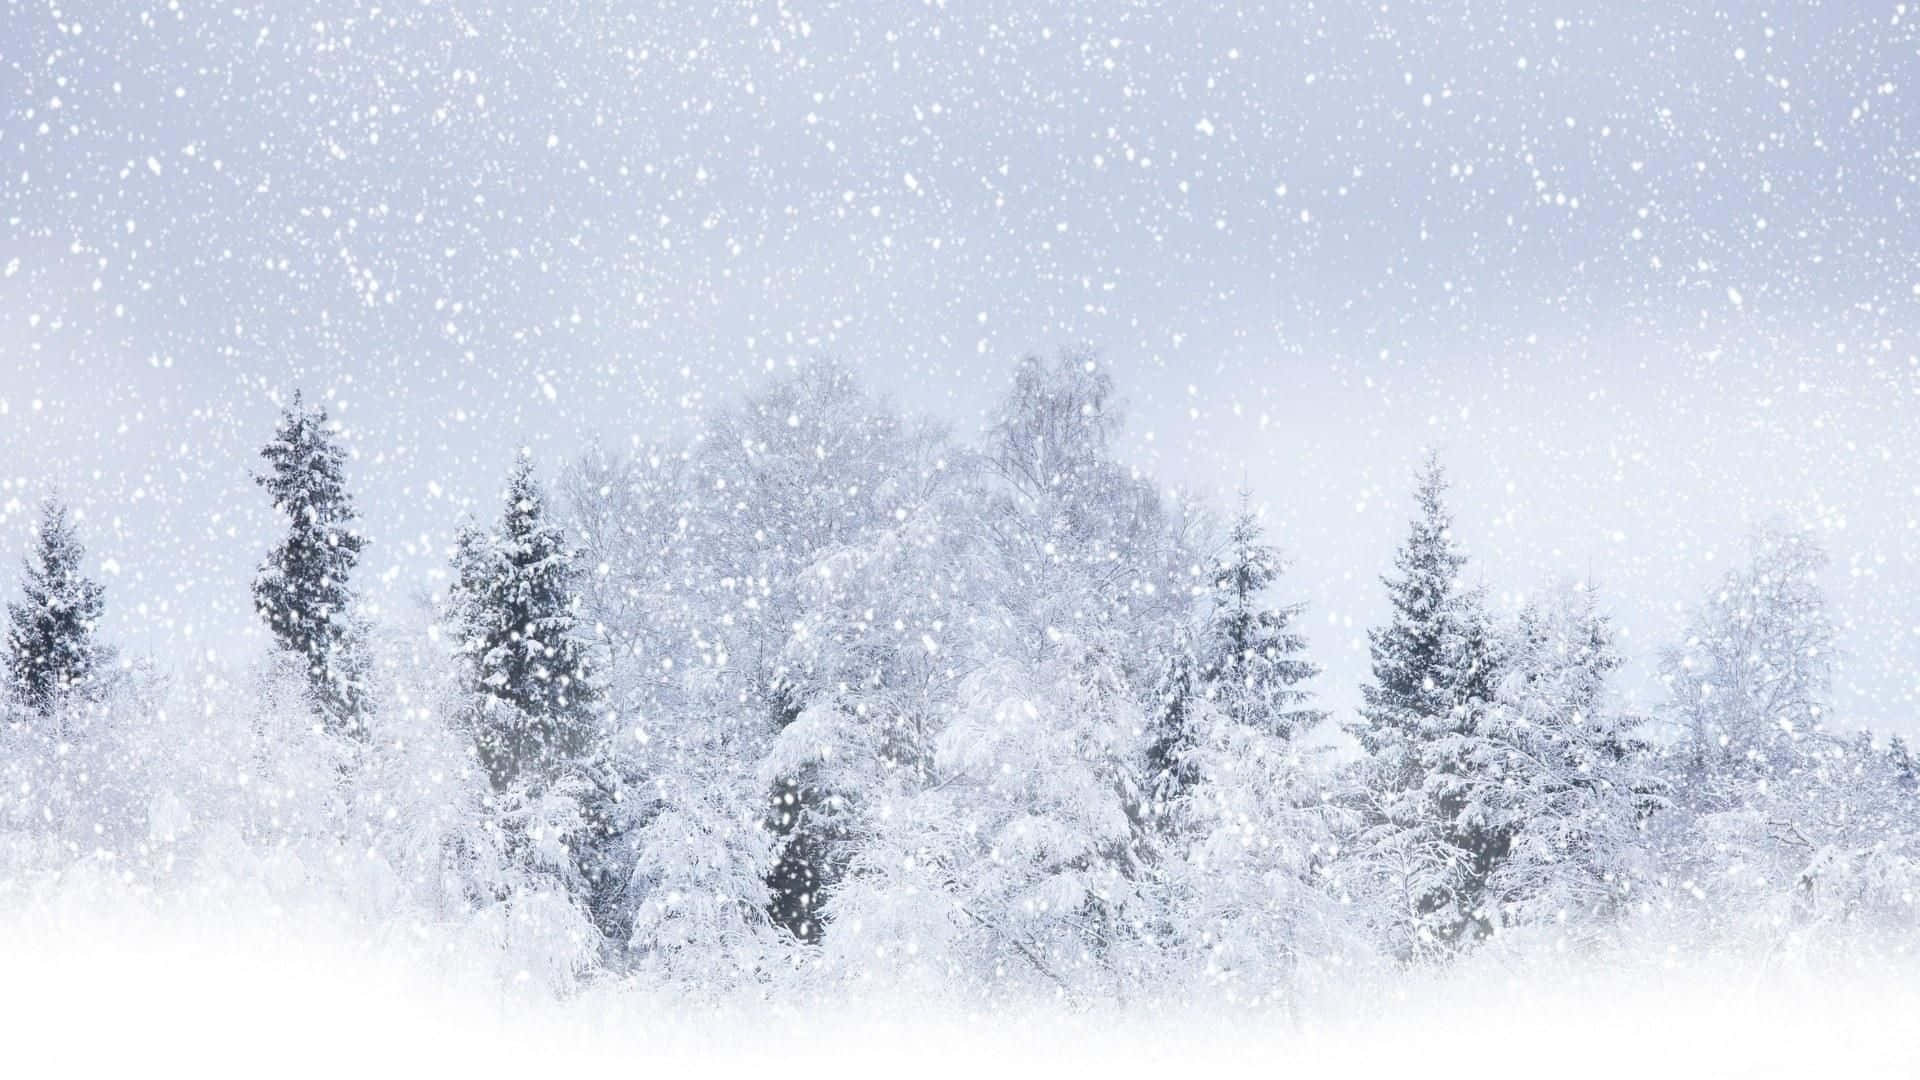 A Beautiful Winter Wonderland of Fresh White Snow.